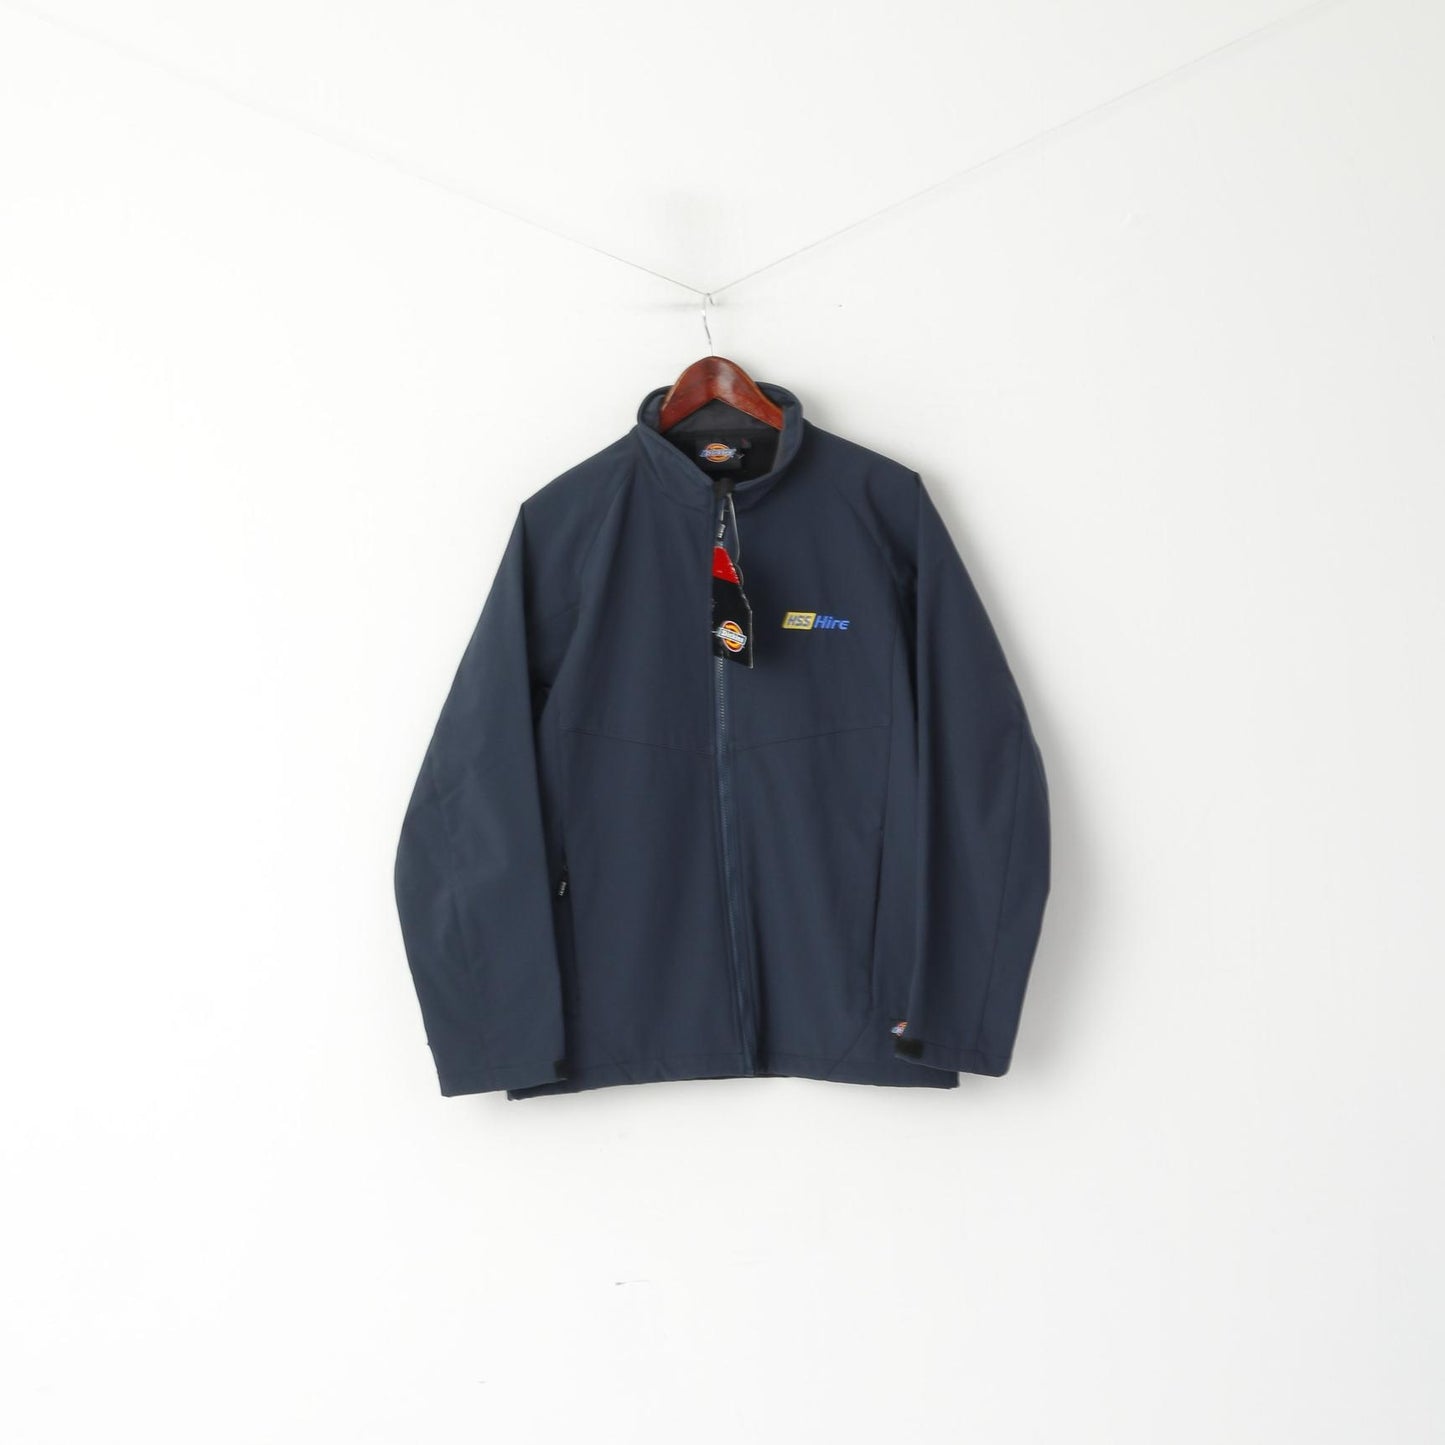 Nuova giacca da uomo Dickies Navy Abbigliamento da lavoro Softshell Cerniera intera Hss Hire Zip Up Top